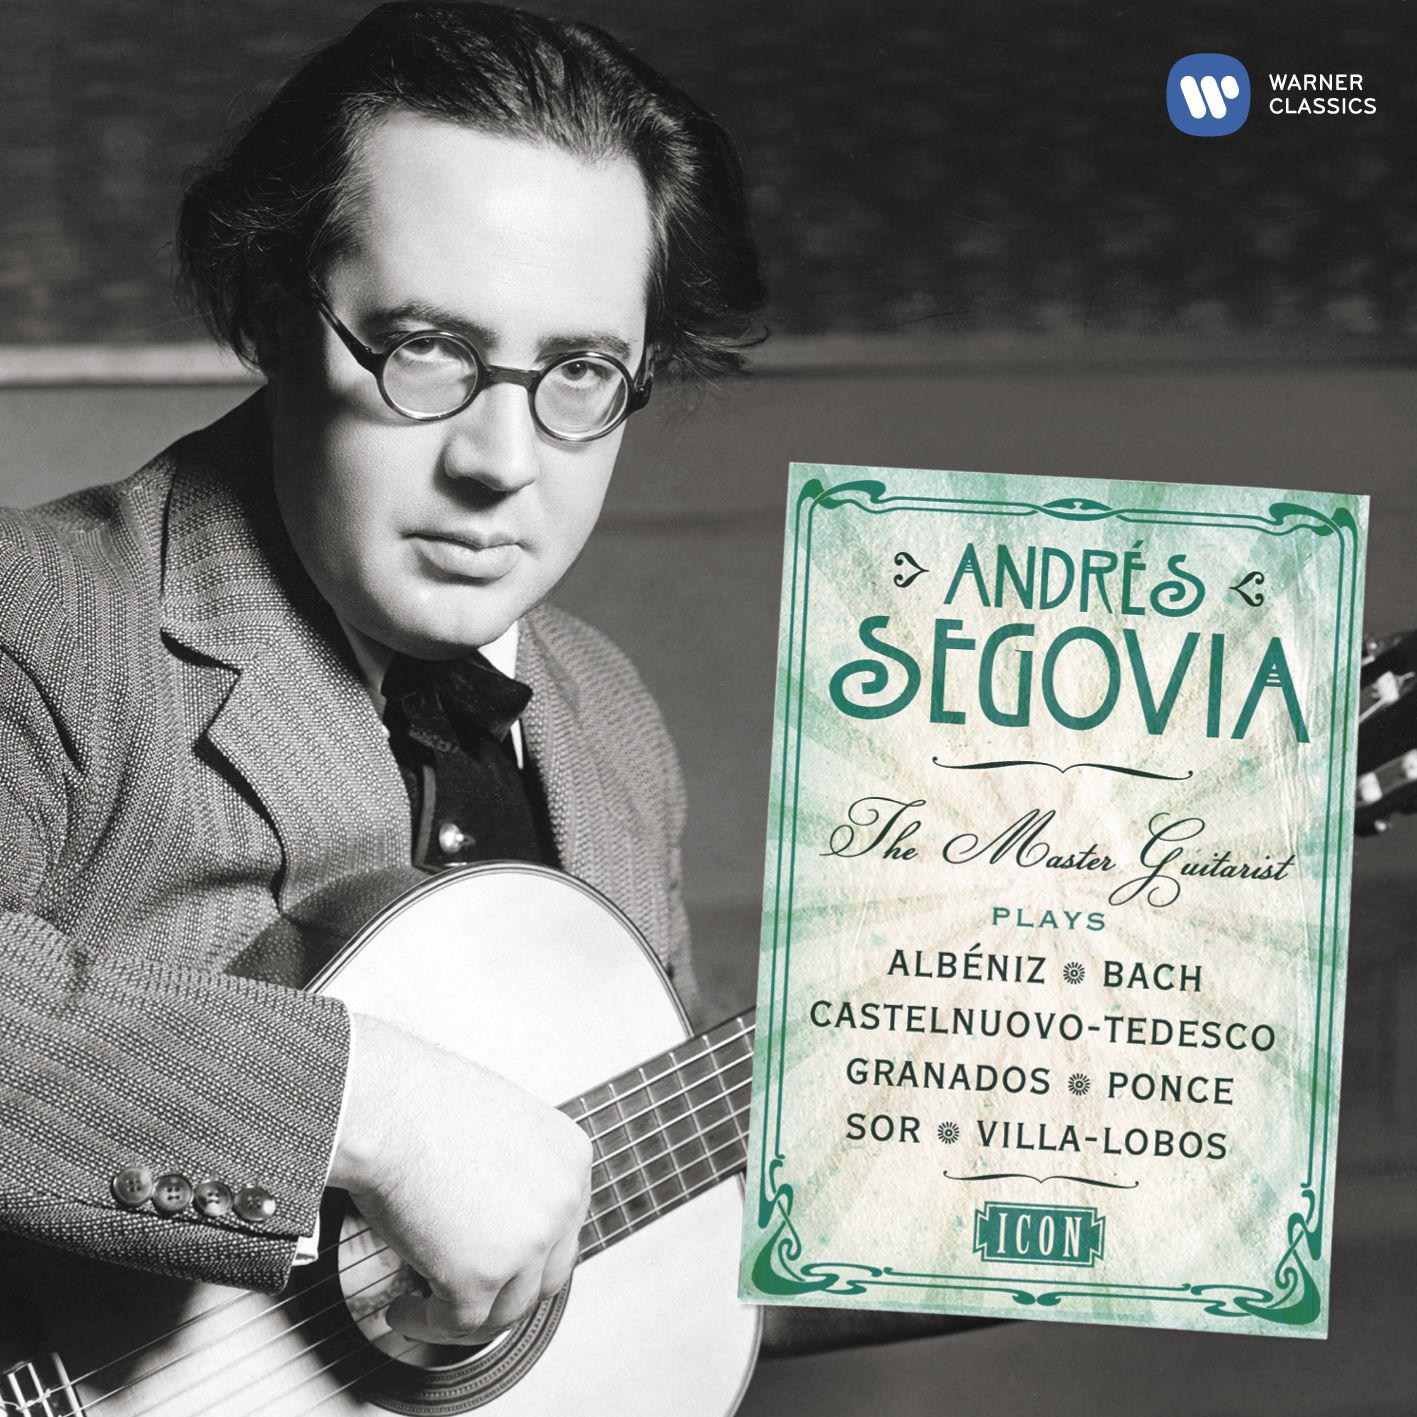 Andrés Segovia - IV. Allegro (Rondo) (from Sonata Clásica) (1994 Remastered Version)